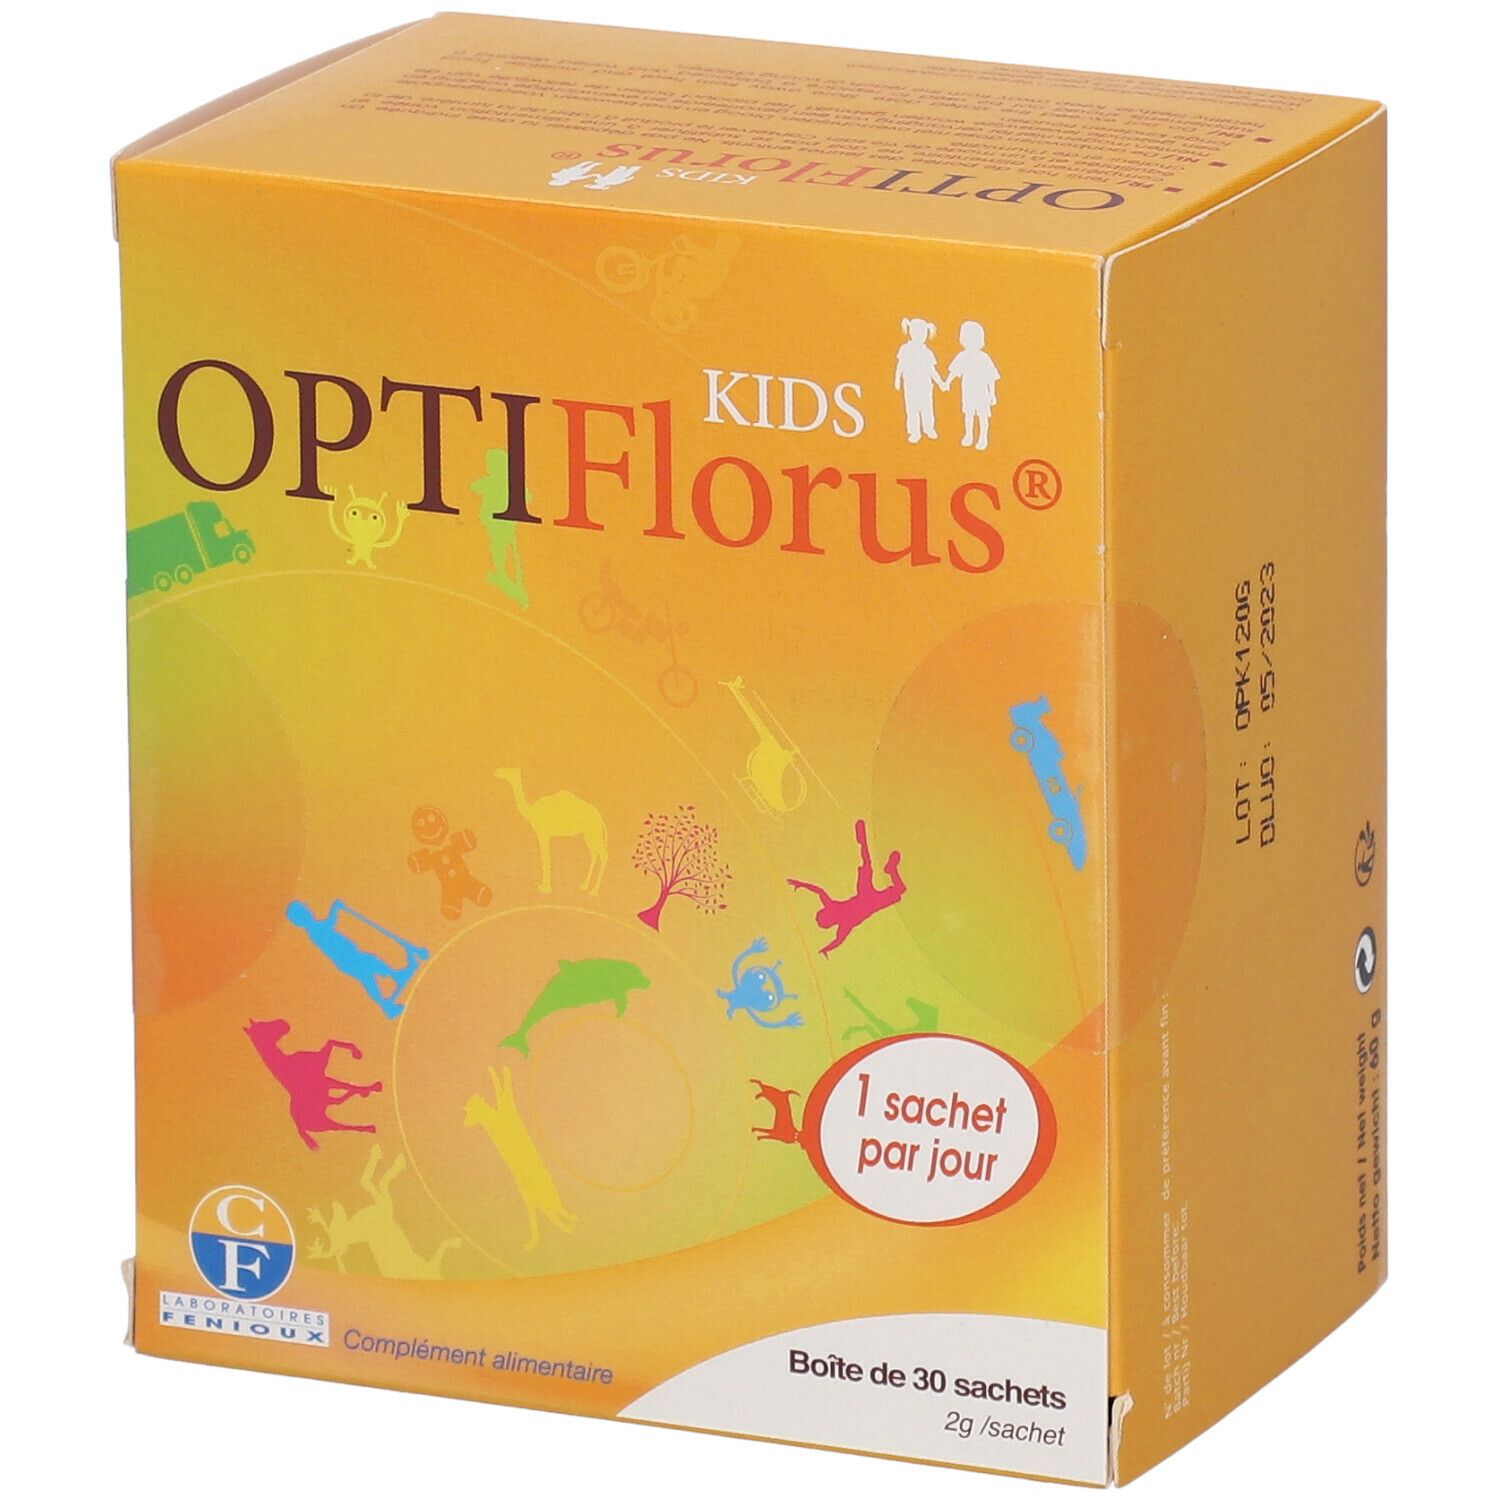 OPTIflorus KIDS